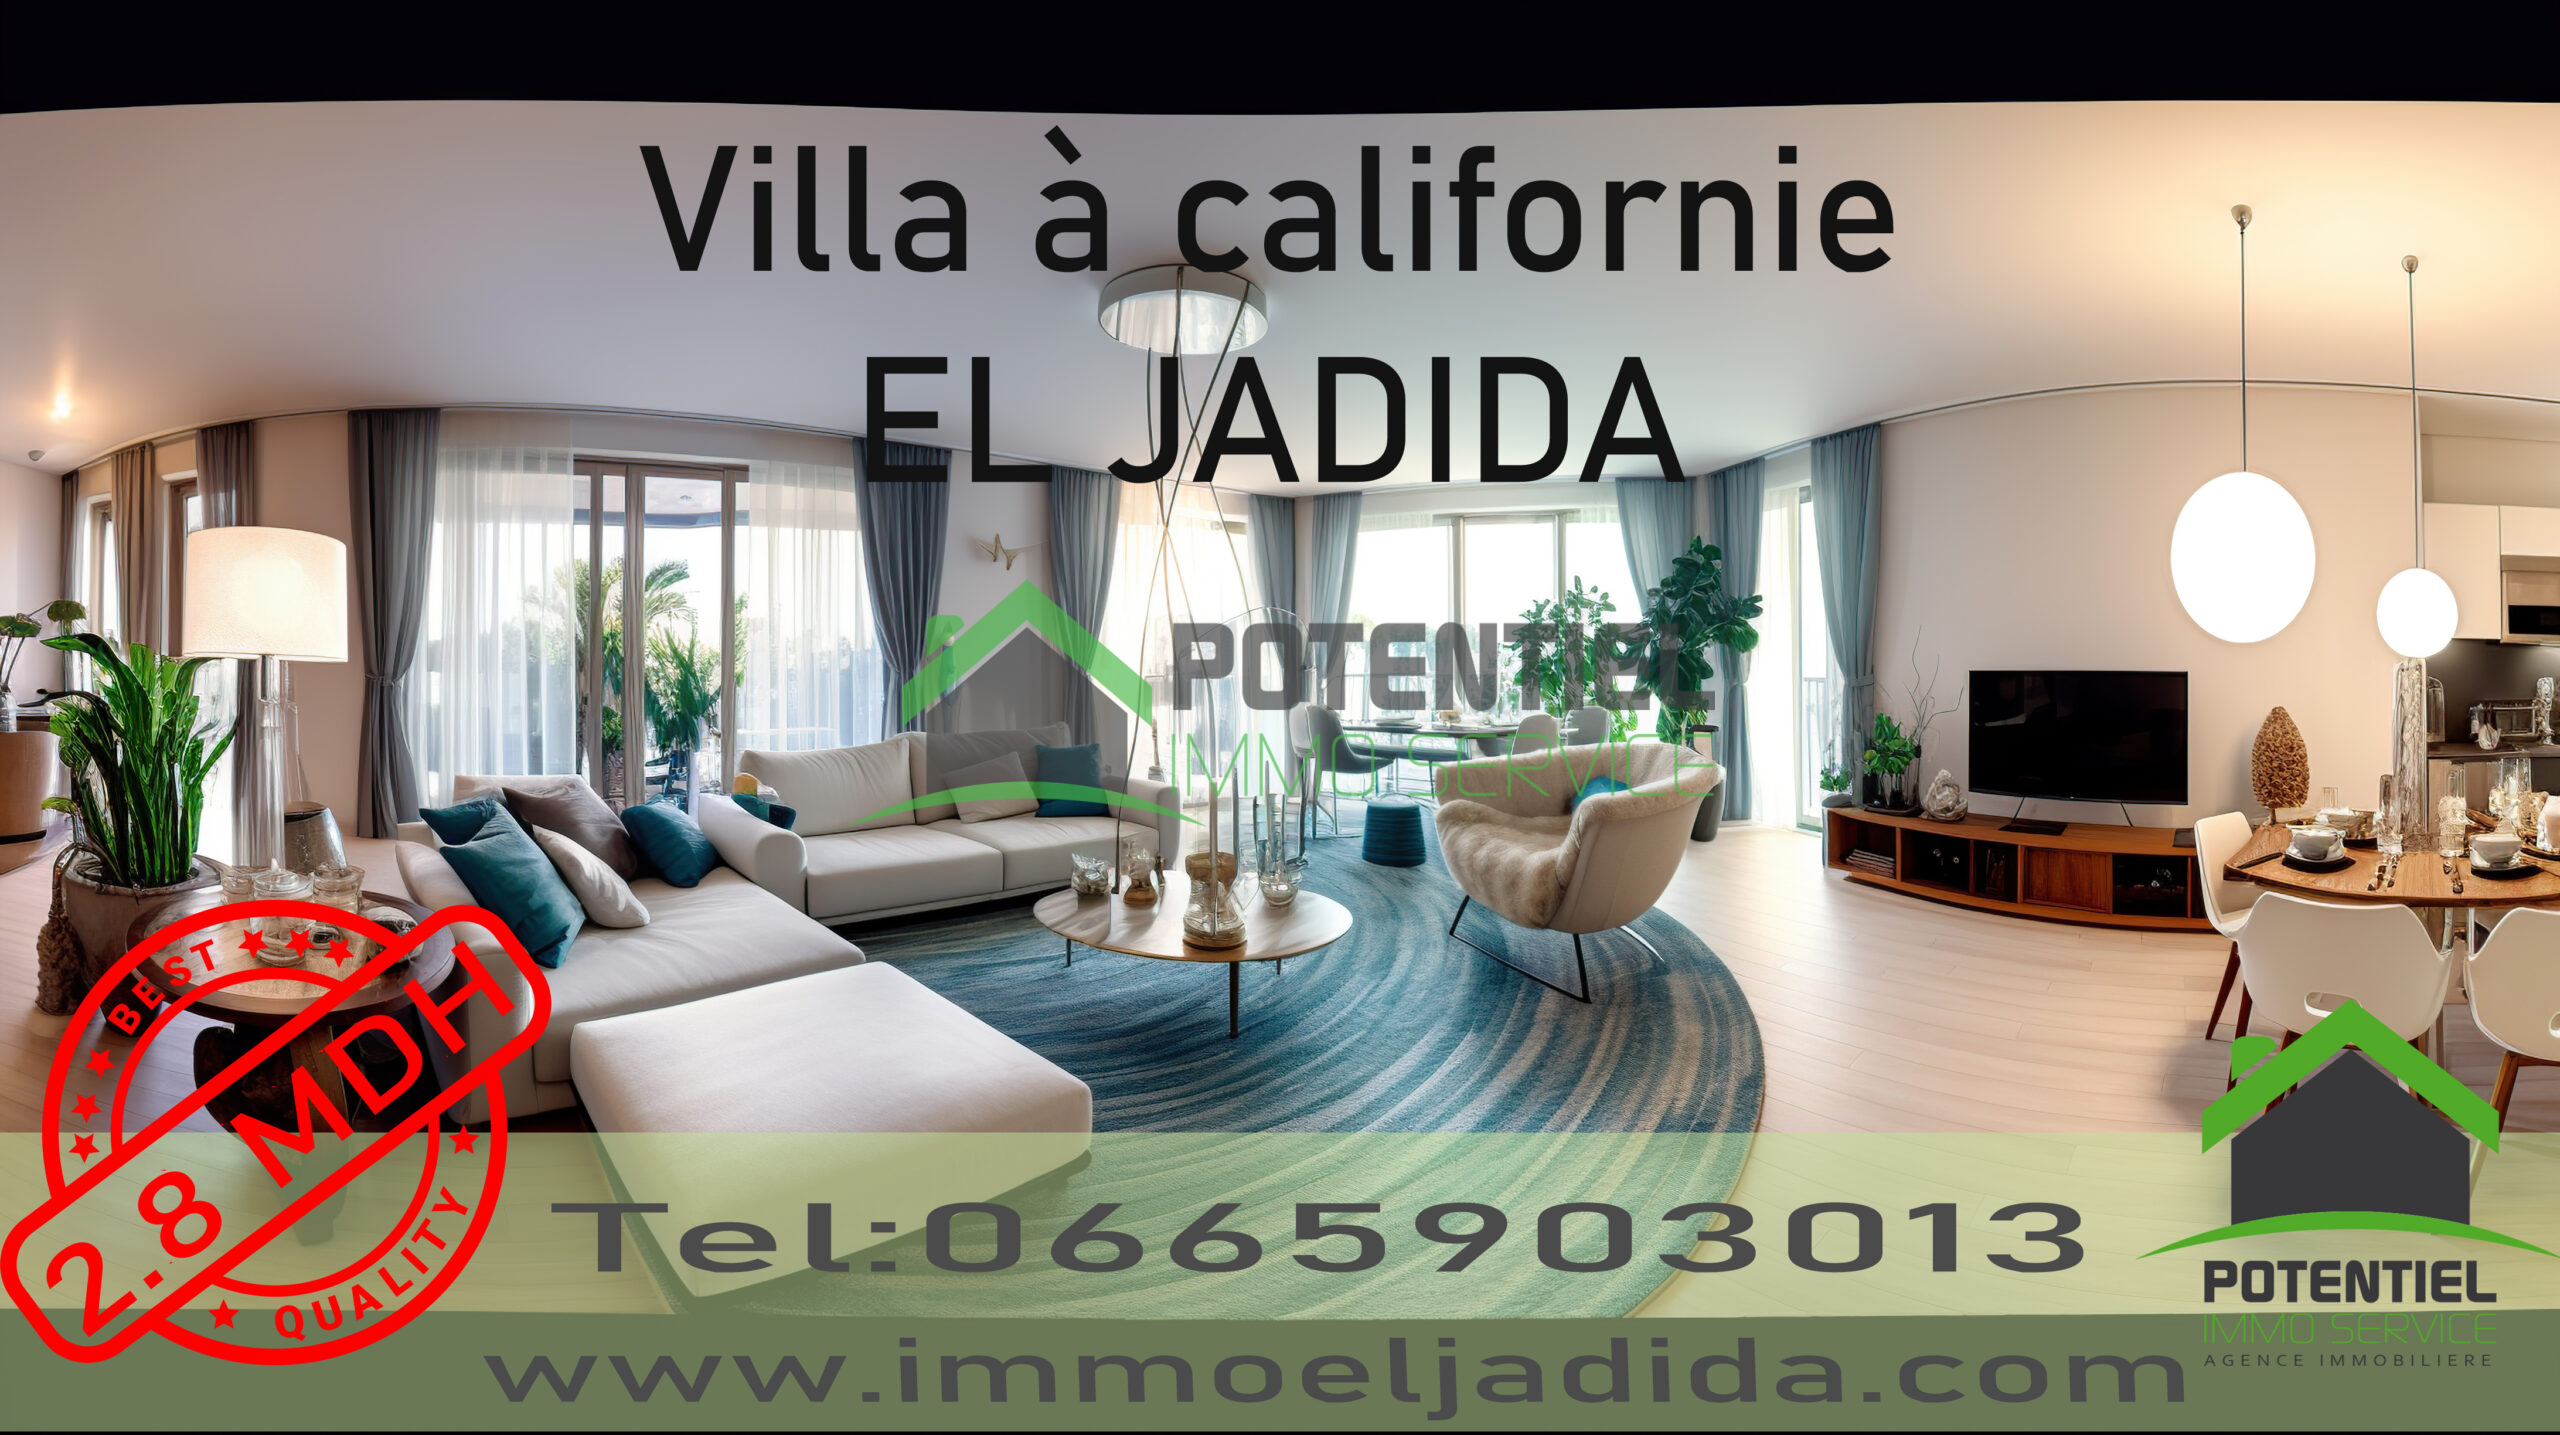 Villa haut standing Californie EL JADIDA - Immo Eljadida - POTENTIEL ...